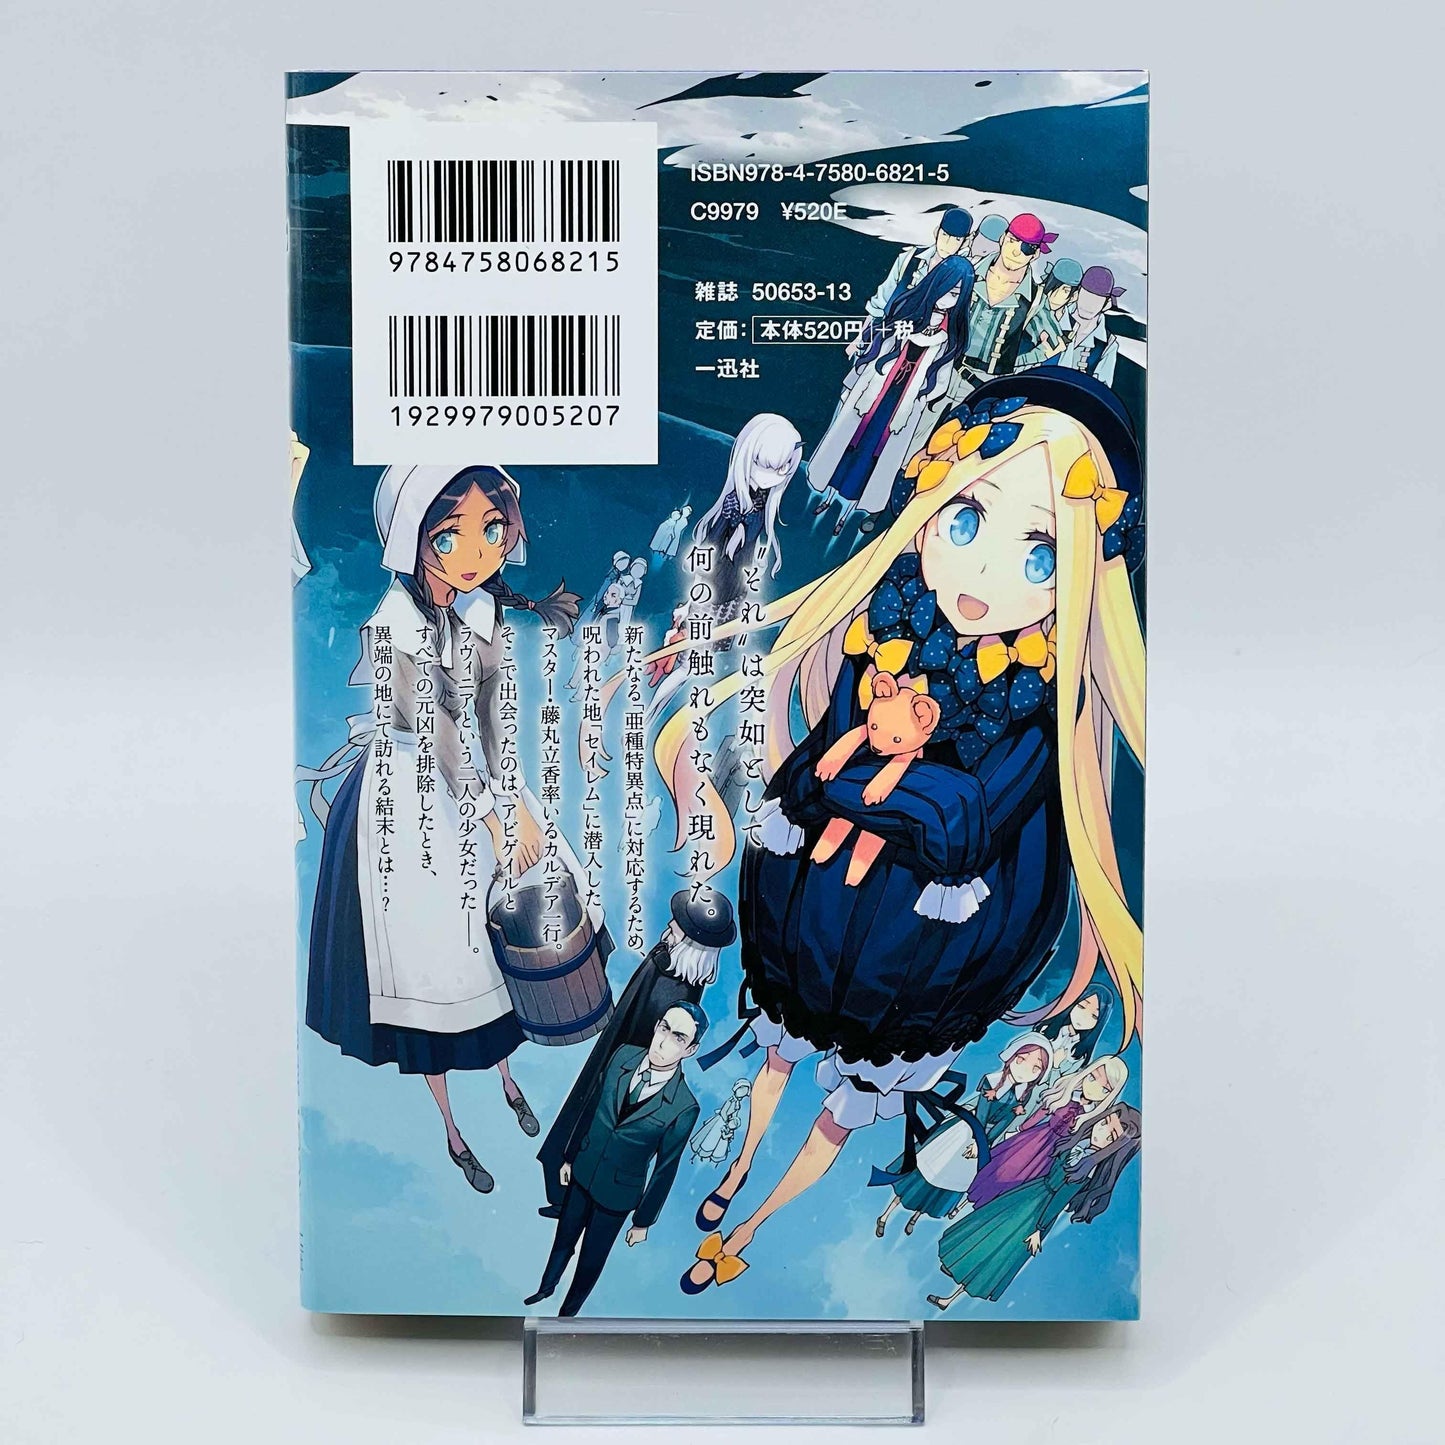 Fate / Grand Order : Epic of Remnant Pseudo Singularity IV Salem - Volume 01 - 1stPrint.net - 1st First Print Edition Manga Store - M-FATESALEM-01-001